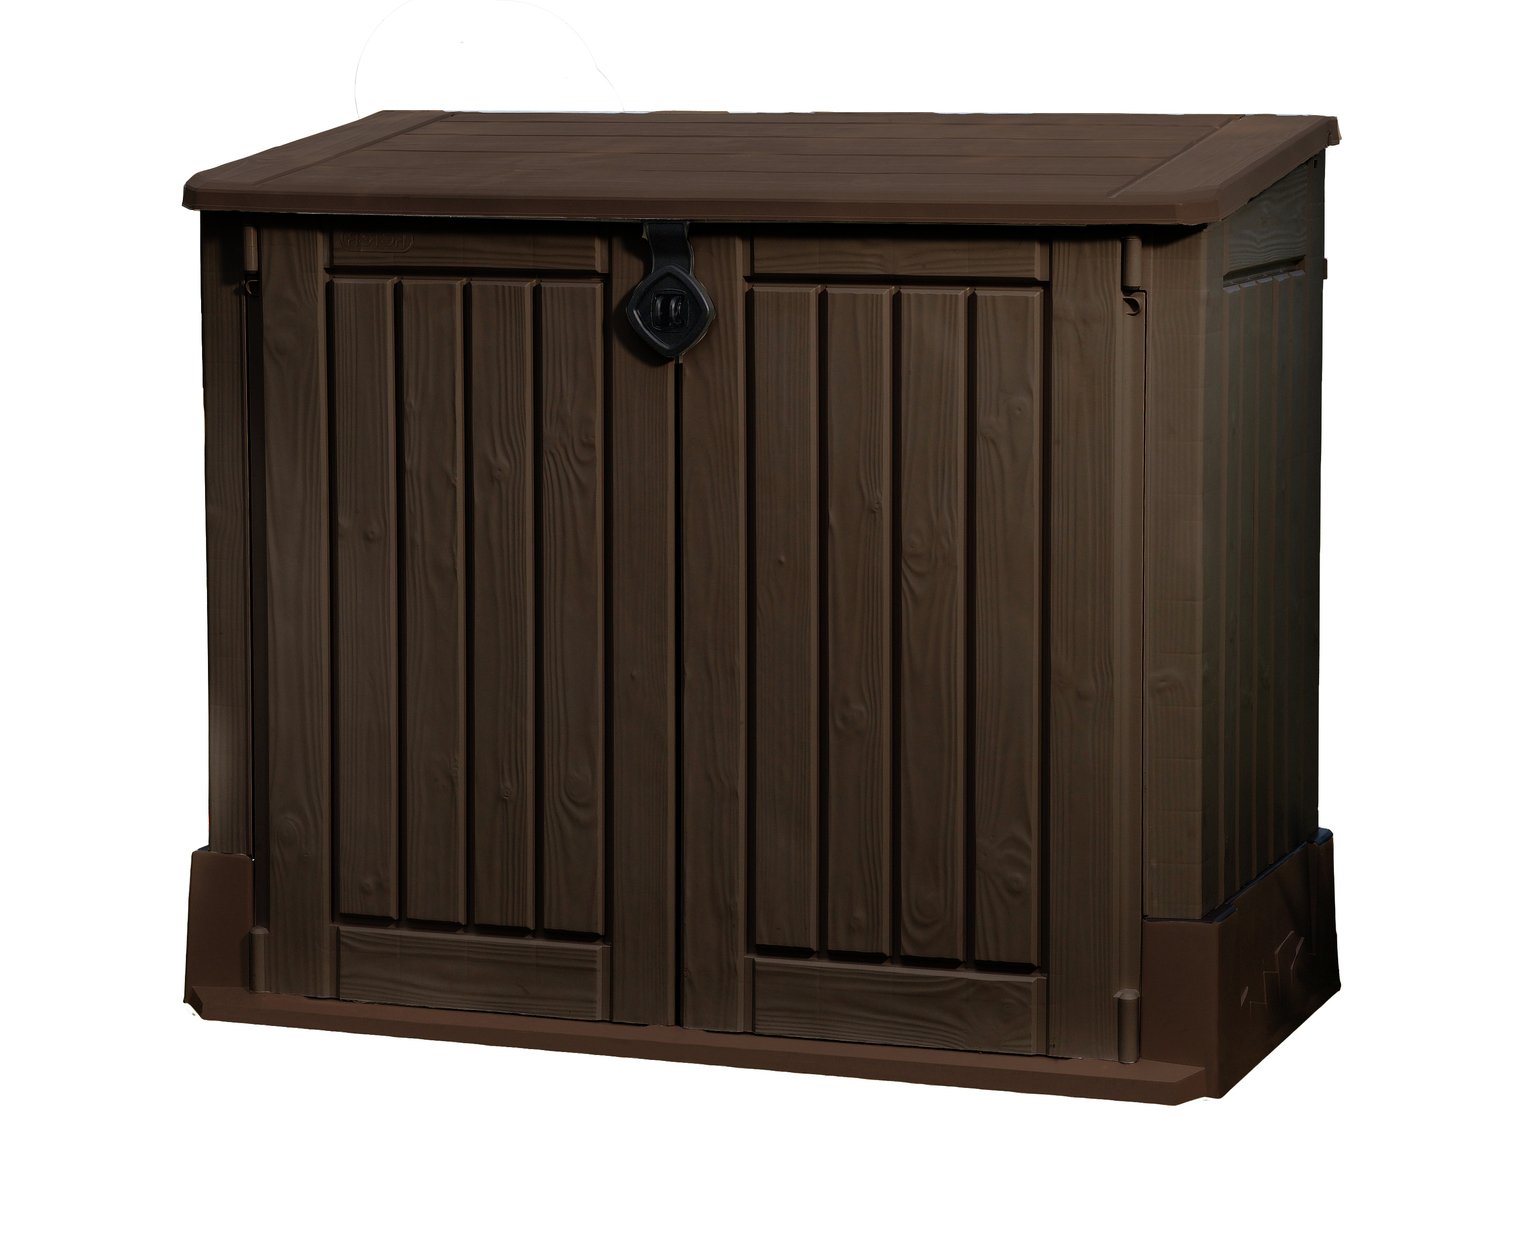 brown storage box